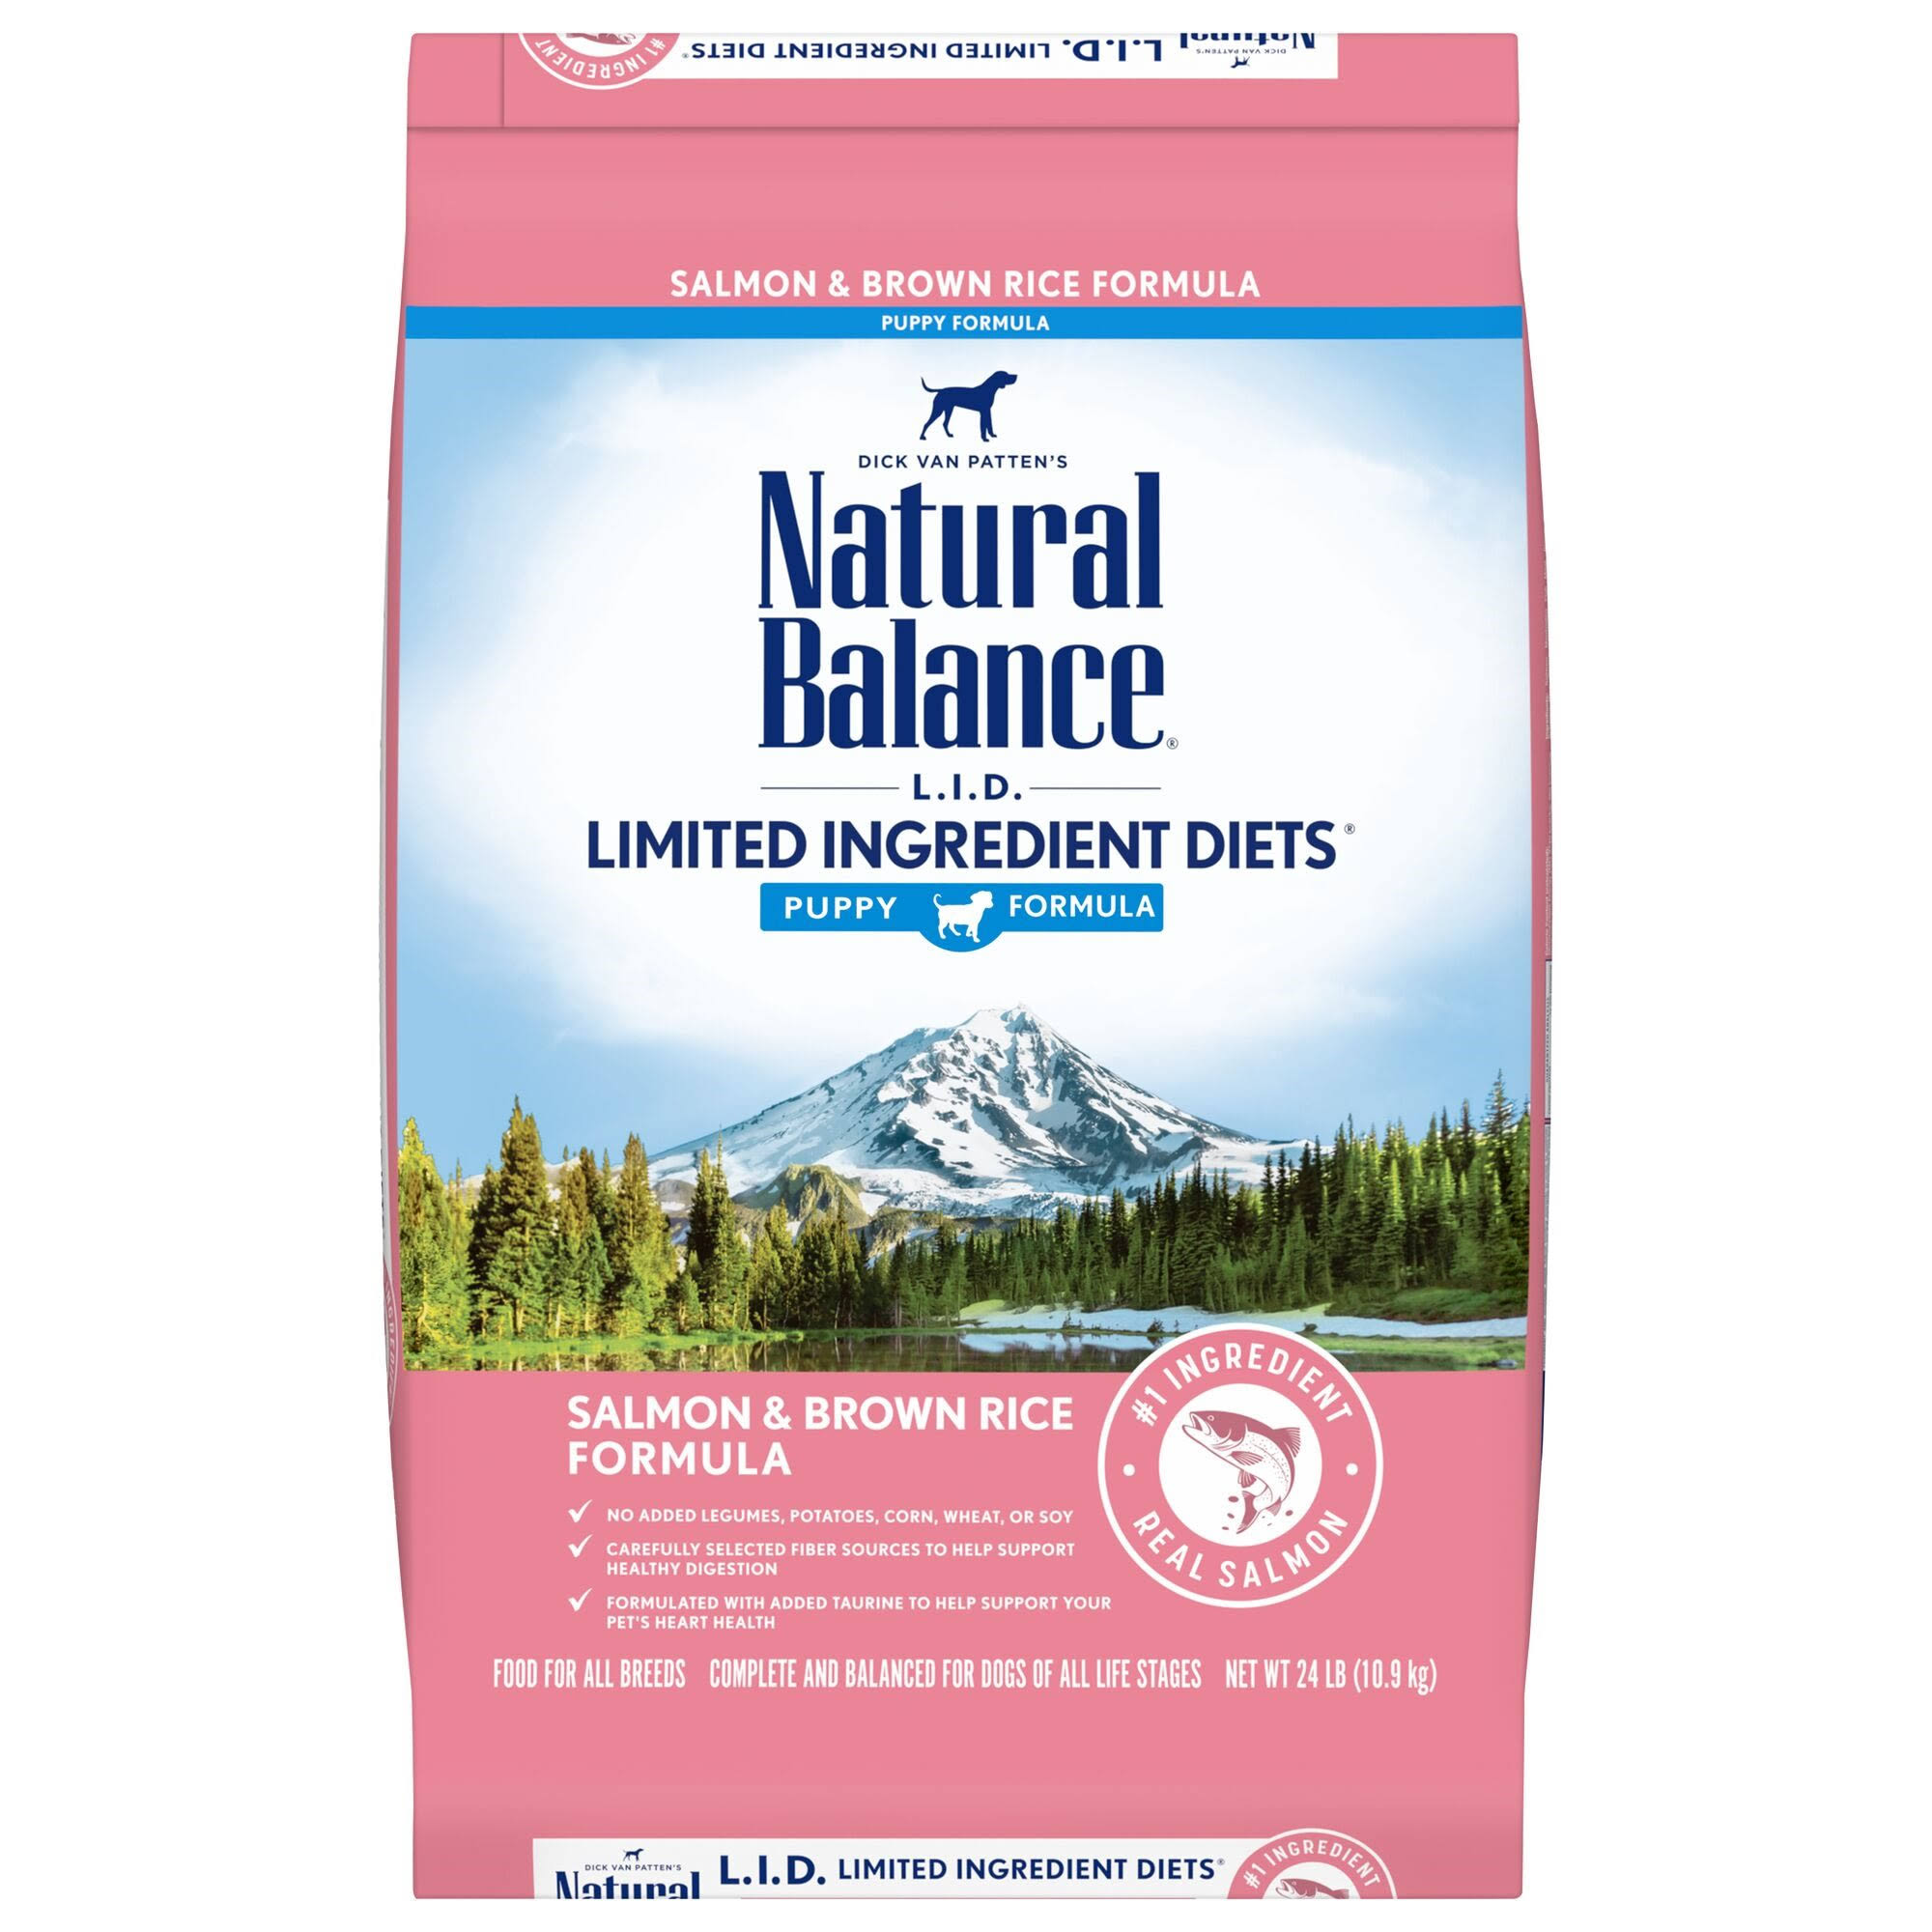 Natural Balance Limited Ingredient Diets Dog Food, Salmon & Brown Rice Formula - 26 lb